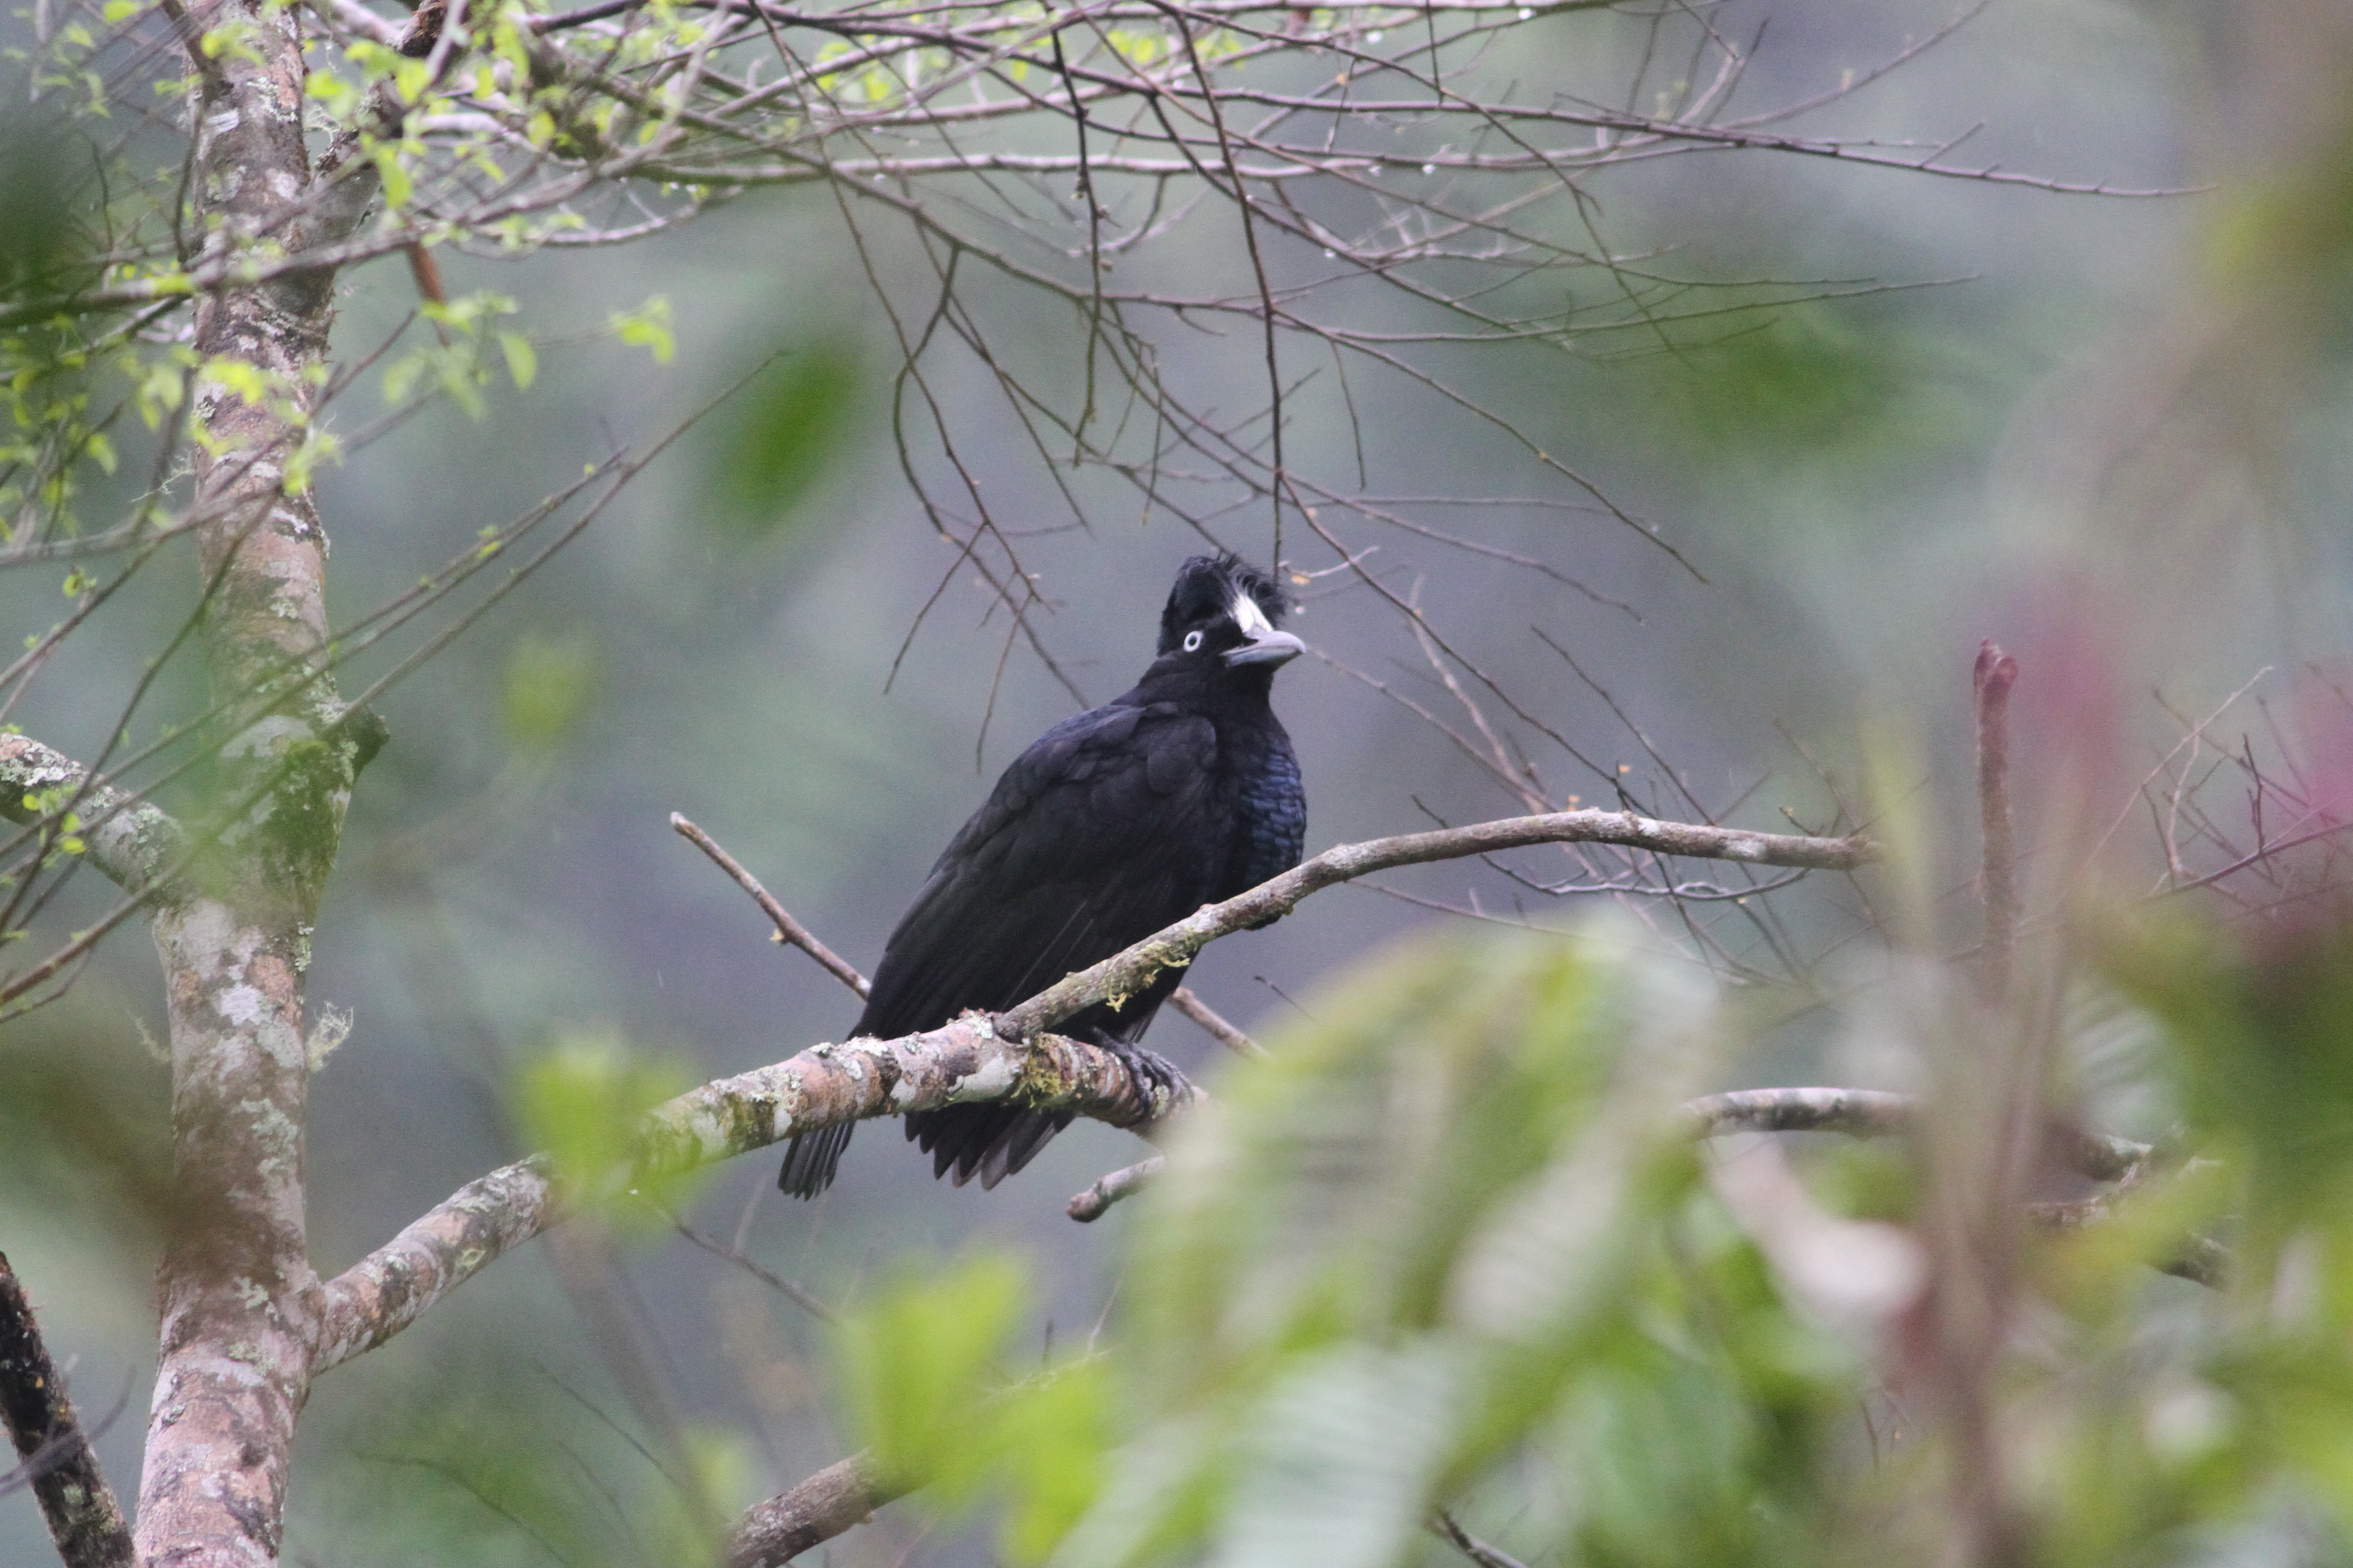 Pretty Amazonian umbrellabird